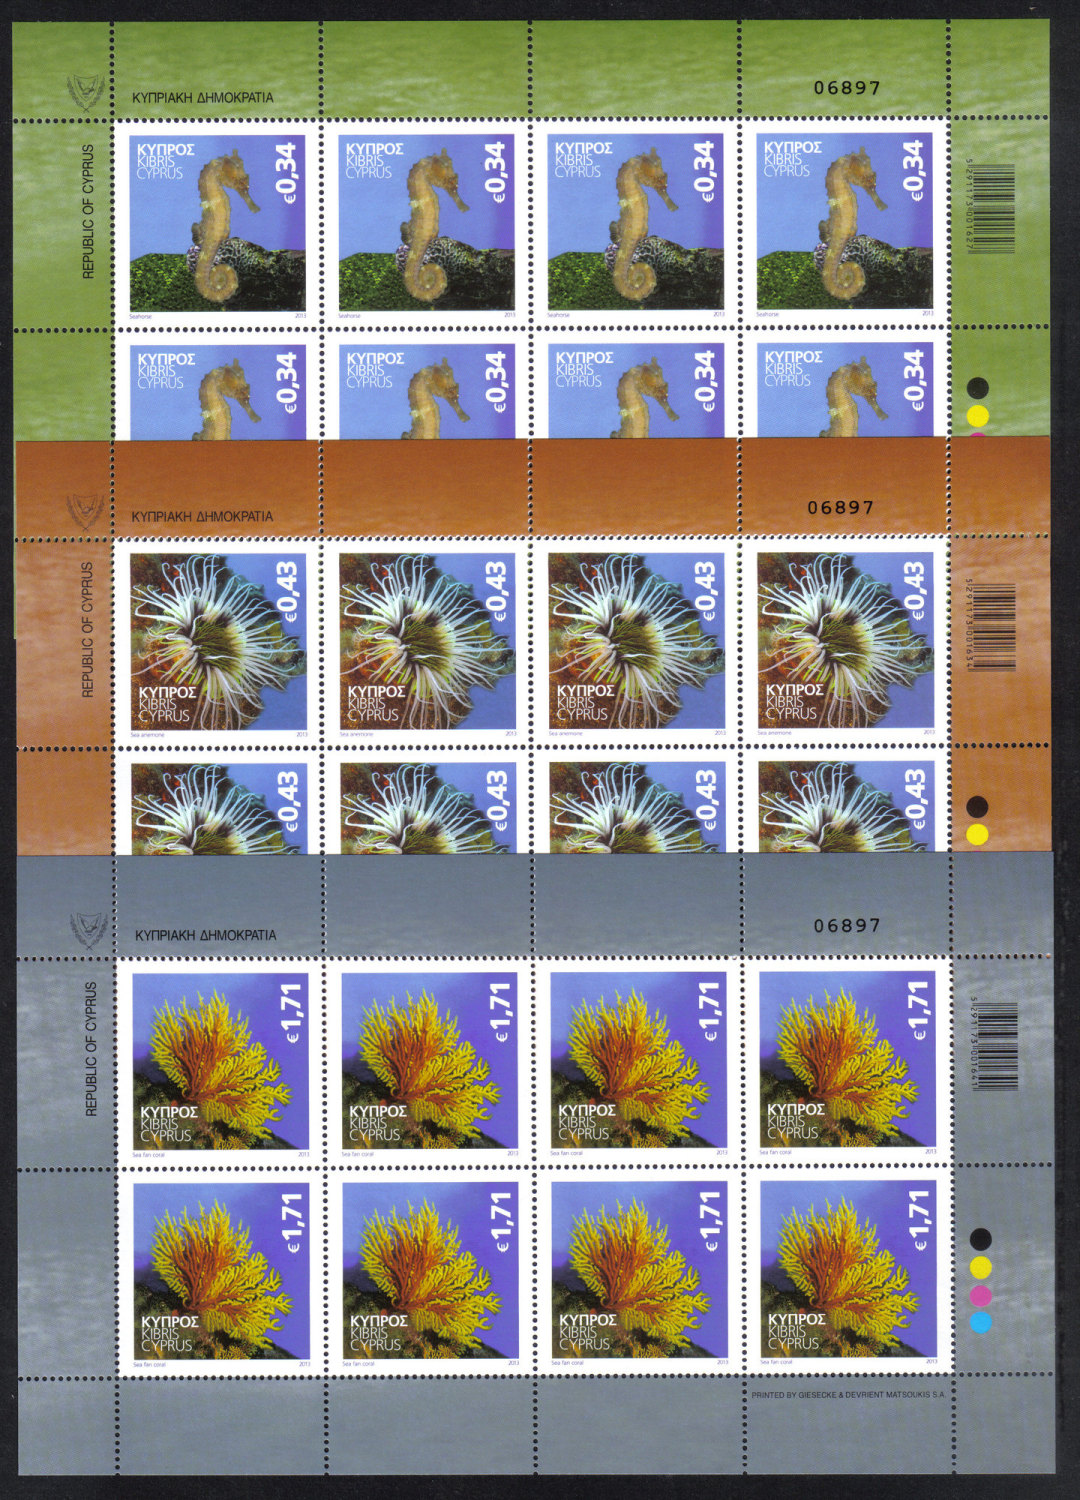 Cyprus Stamps SG 2013 (g) Organisms of the Mediterranean marine environment